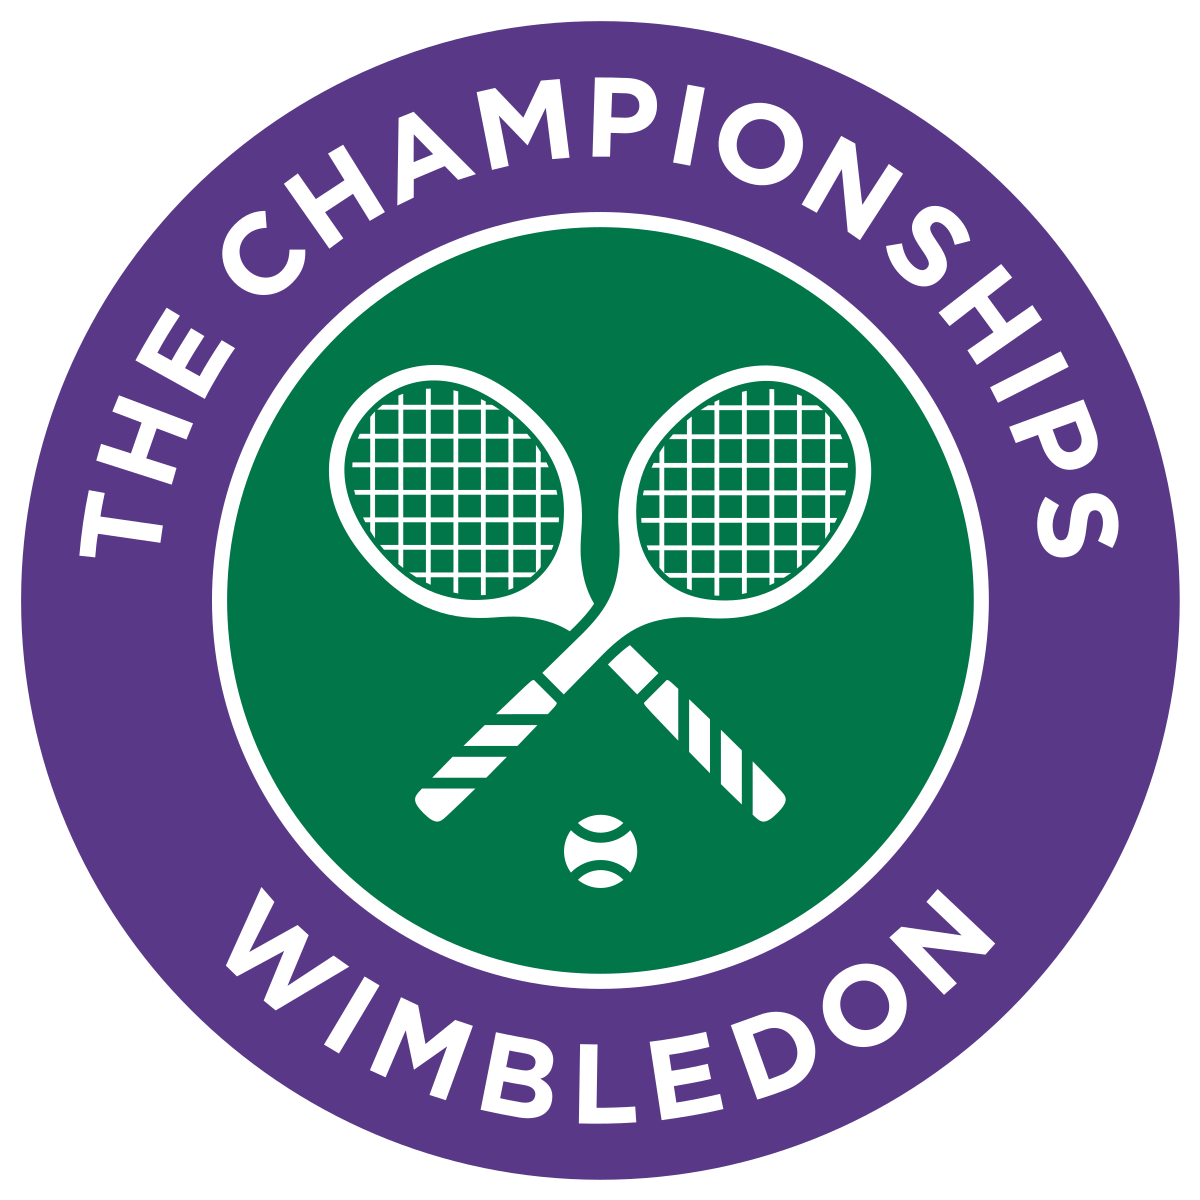 Wimbledon Championships: History and 10 Fun Facts